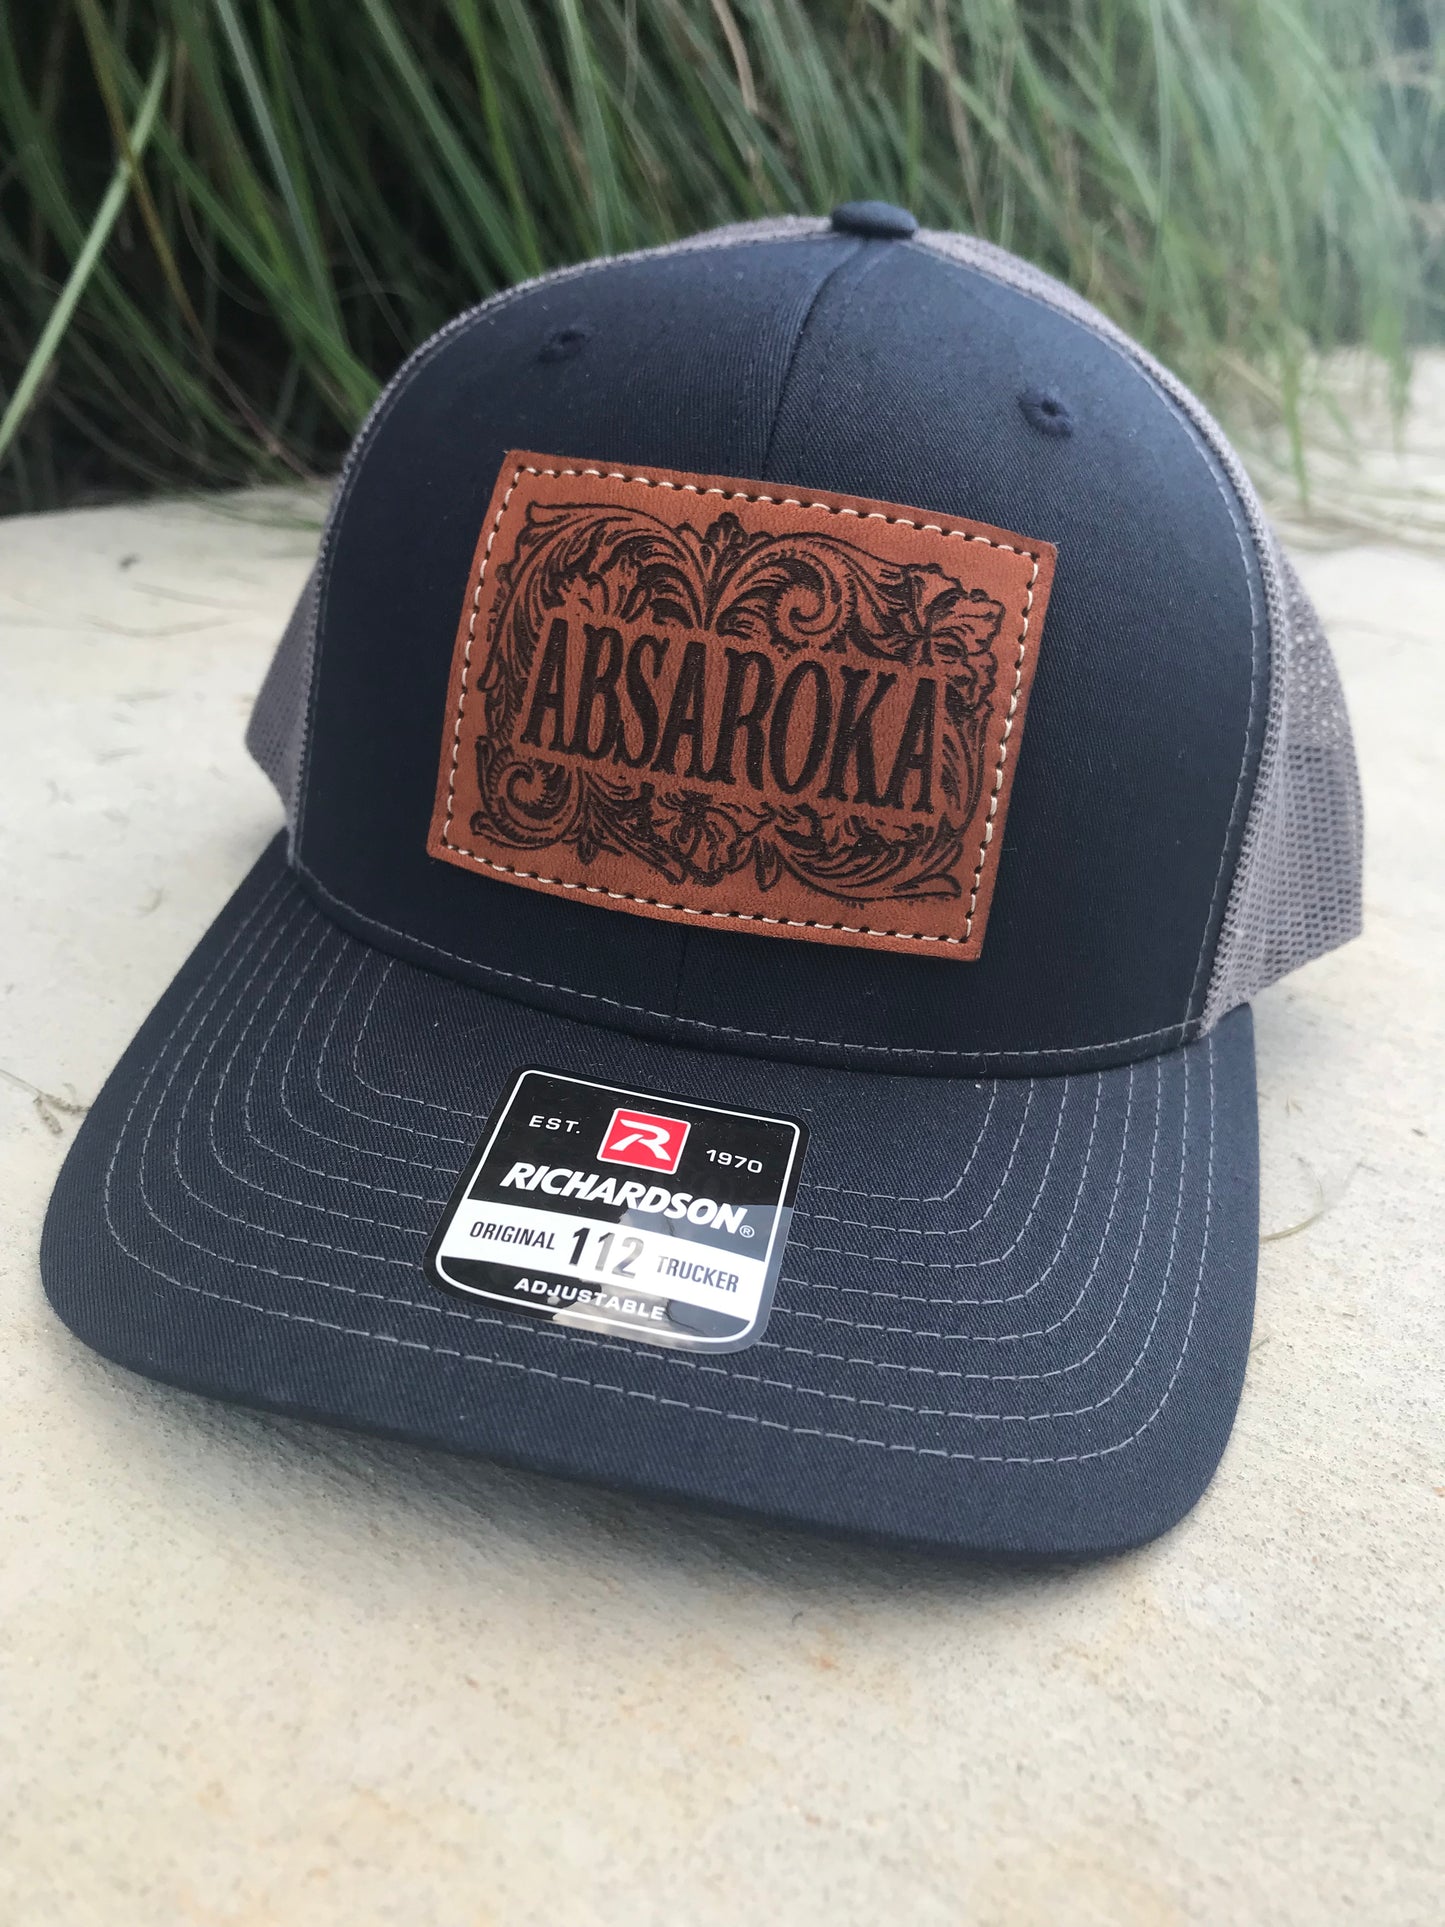 Absaroka Tooled Leather Patch Snapback Hat